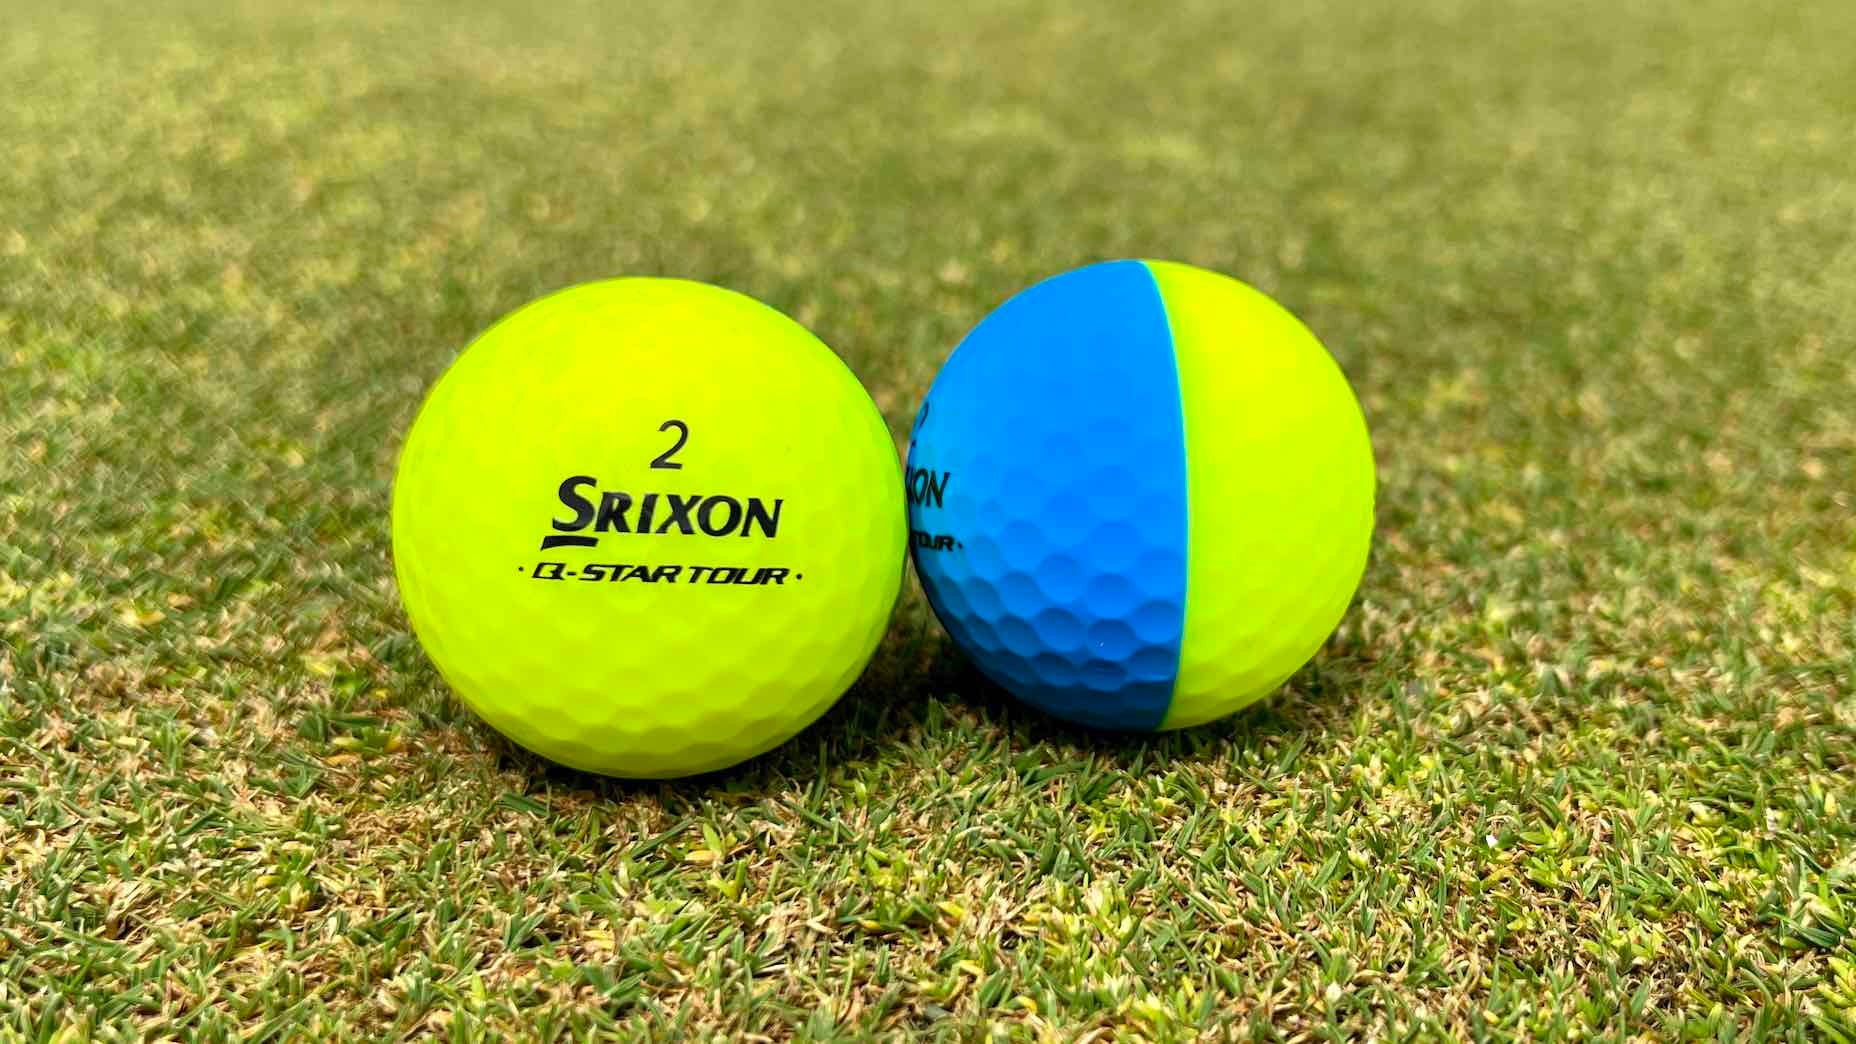 Srixon Q star tour divide golf balls side